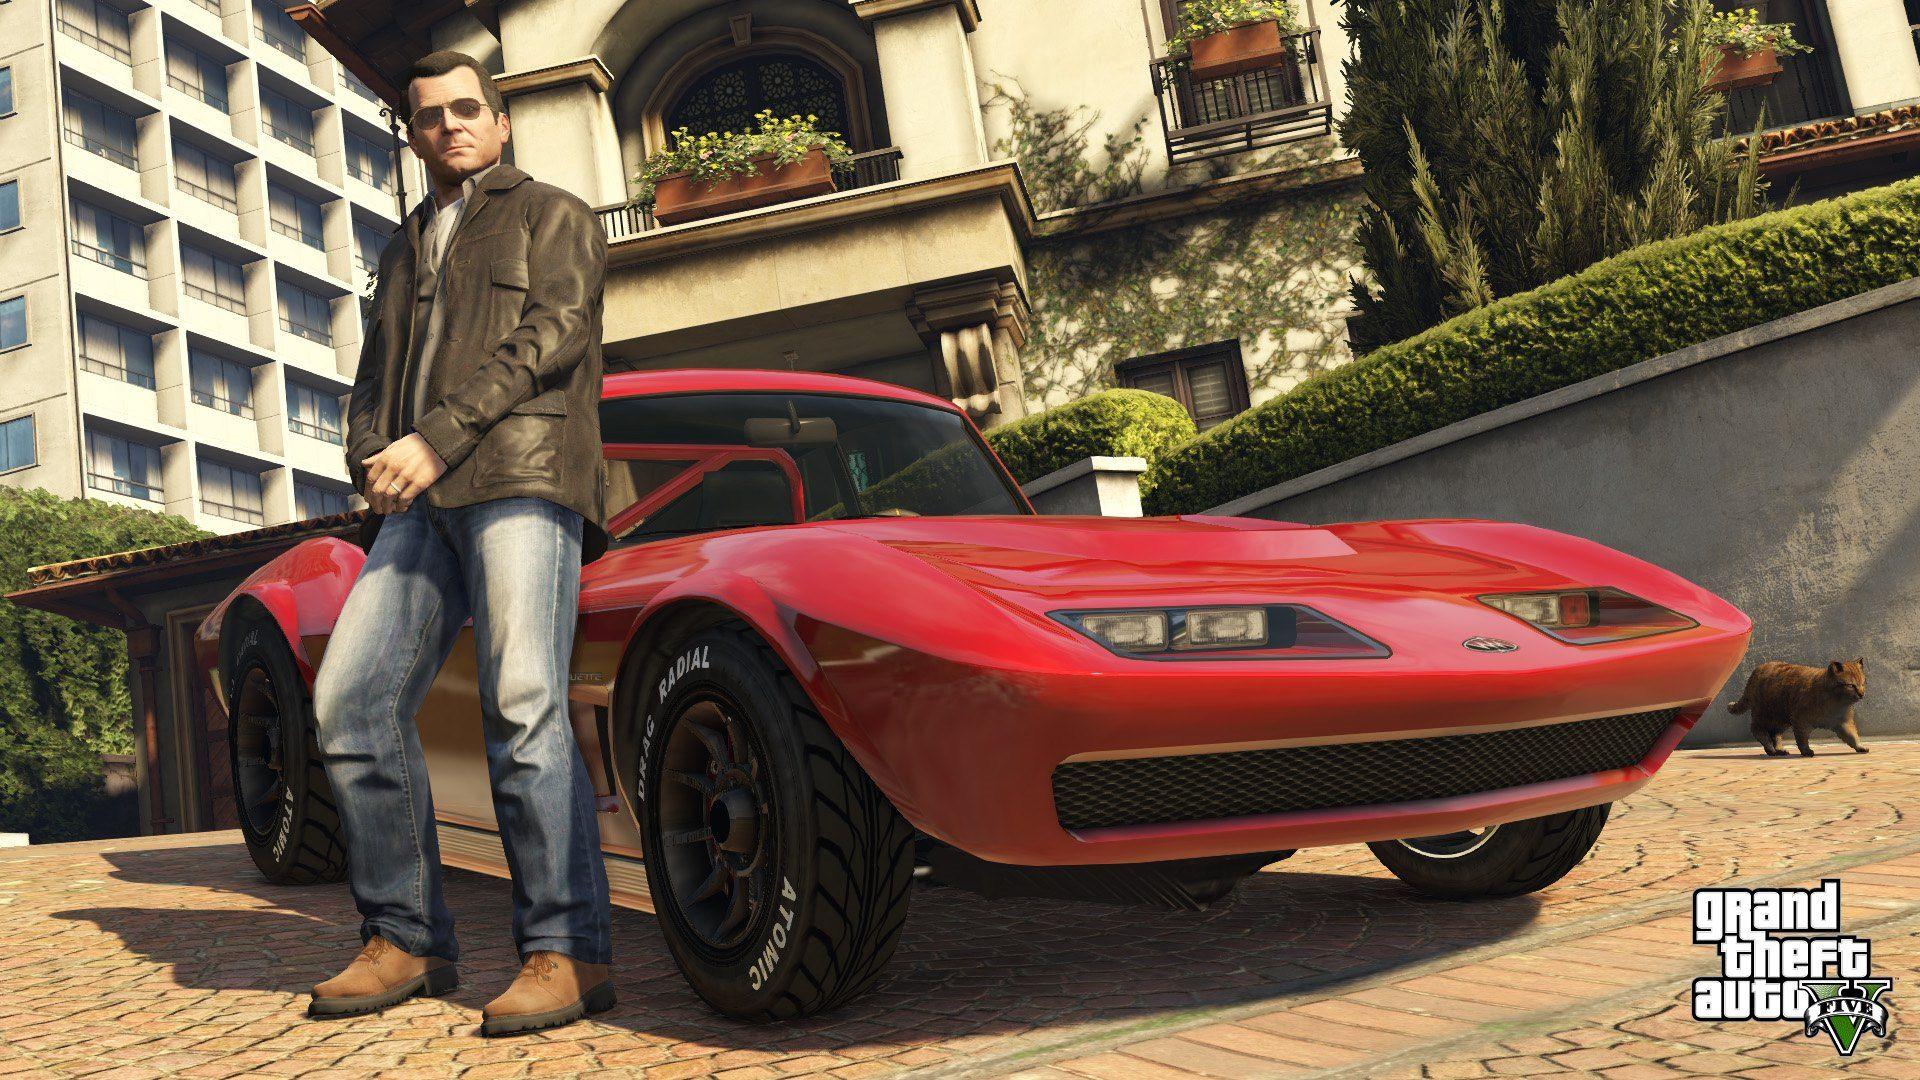 cool 6 Grand Theft Auto 5 HD